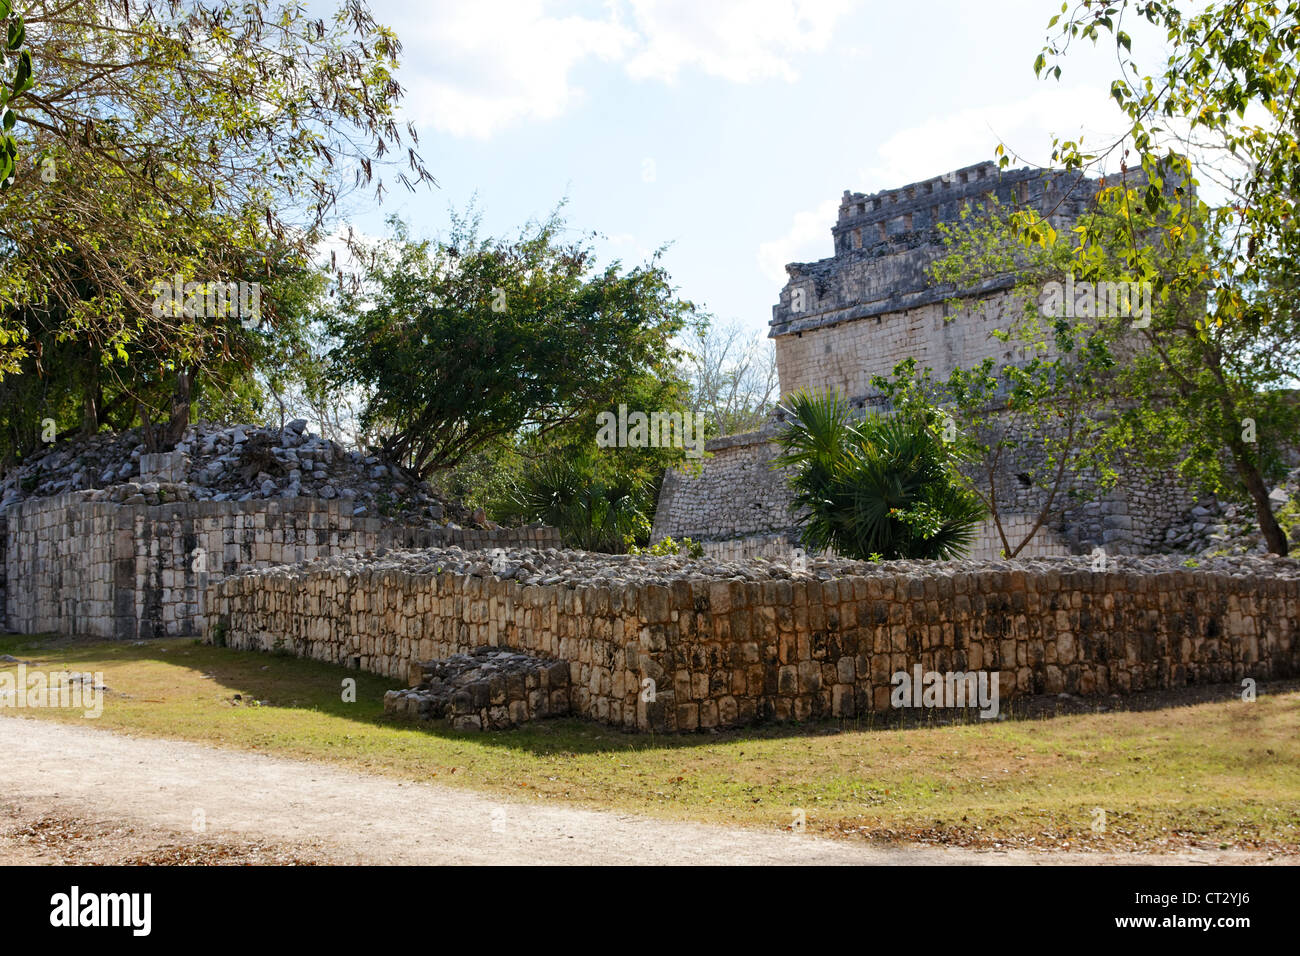 Ruins of Mayan buildings sit among the tropical vegetation at Chichen Itza, Yucatan, Mexico. Stock Photo